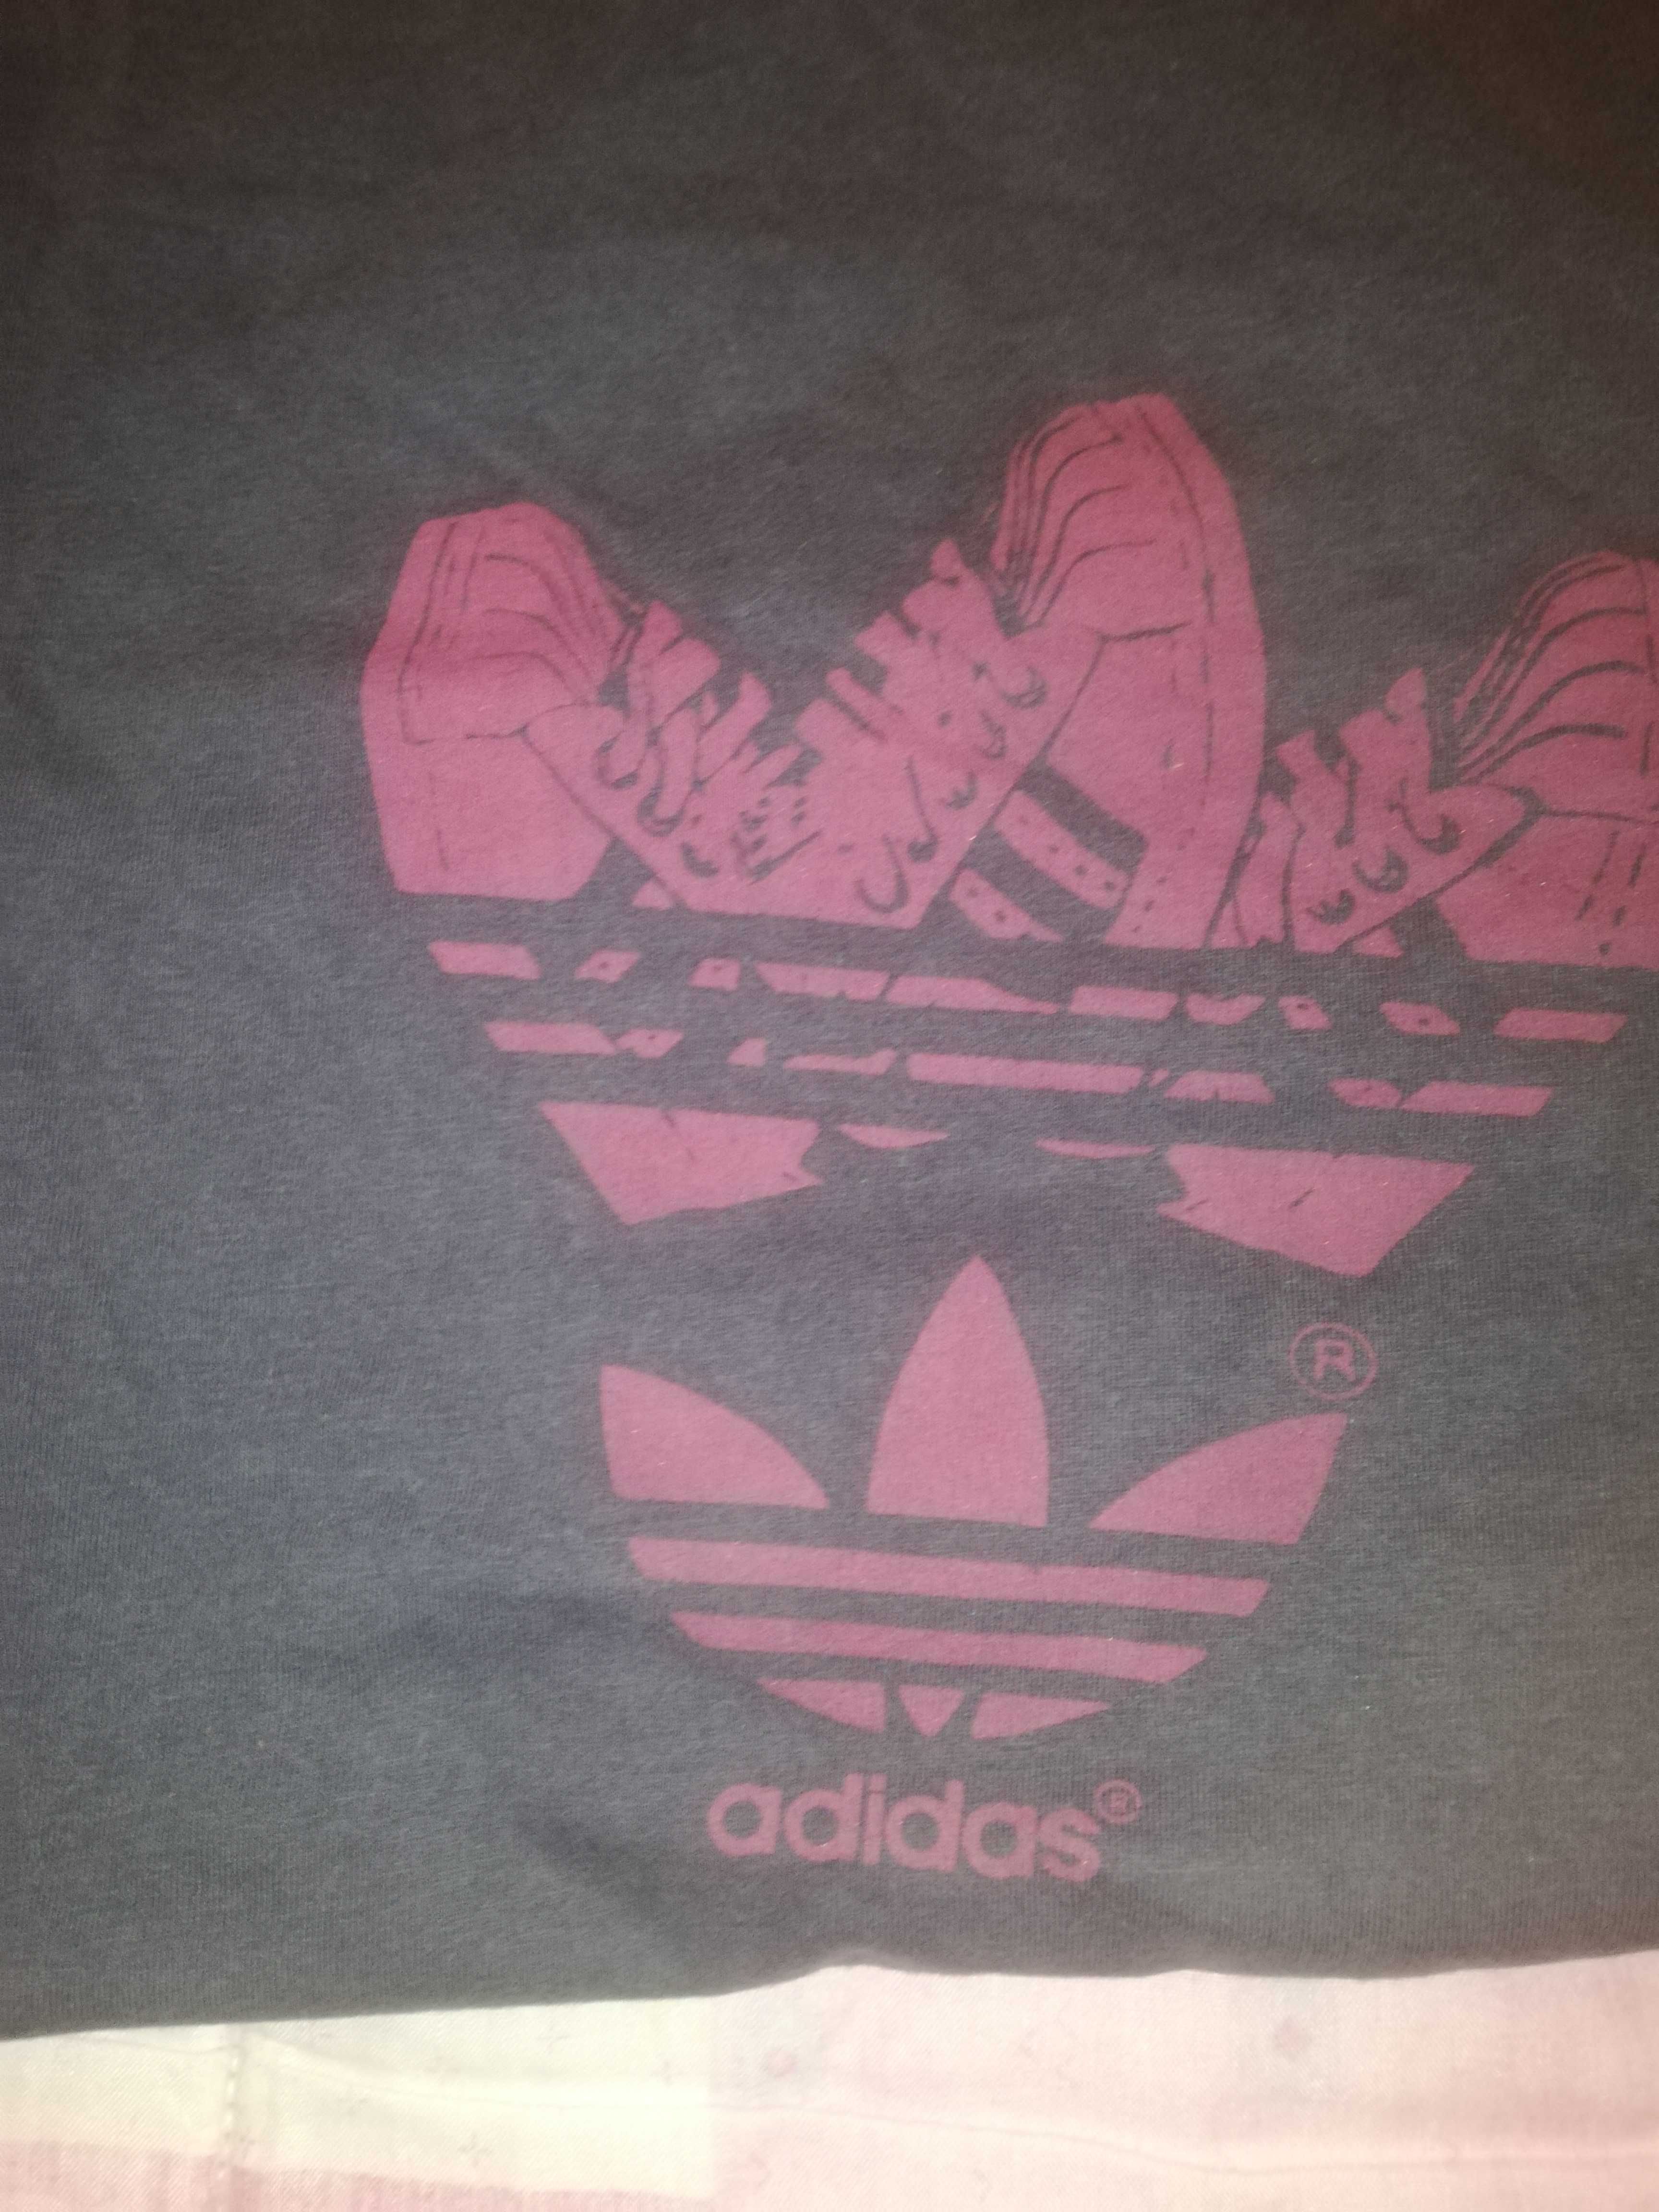 T-shirts Adidas old school